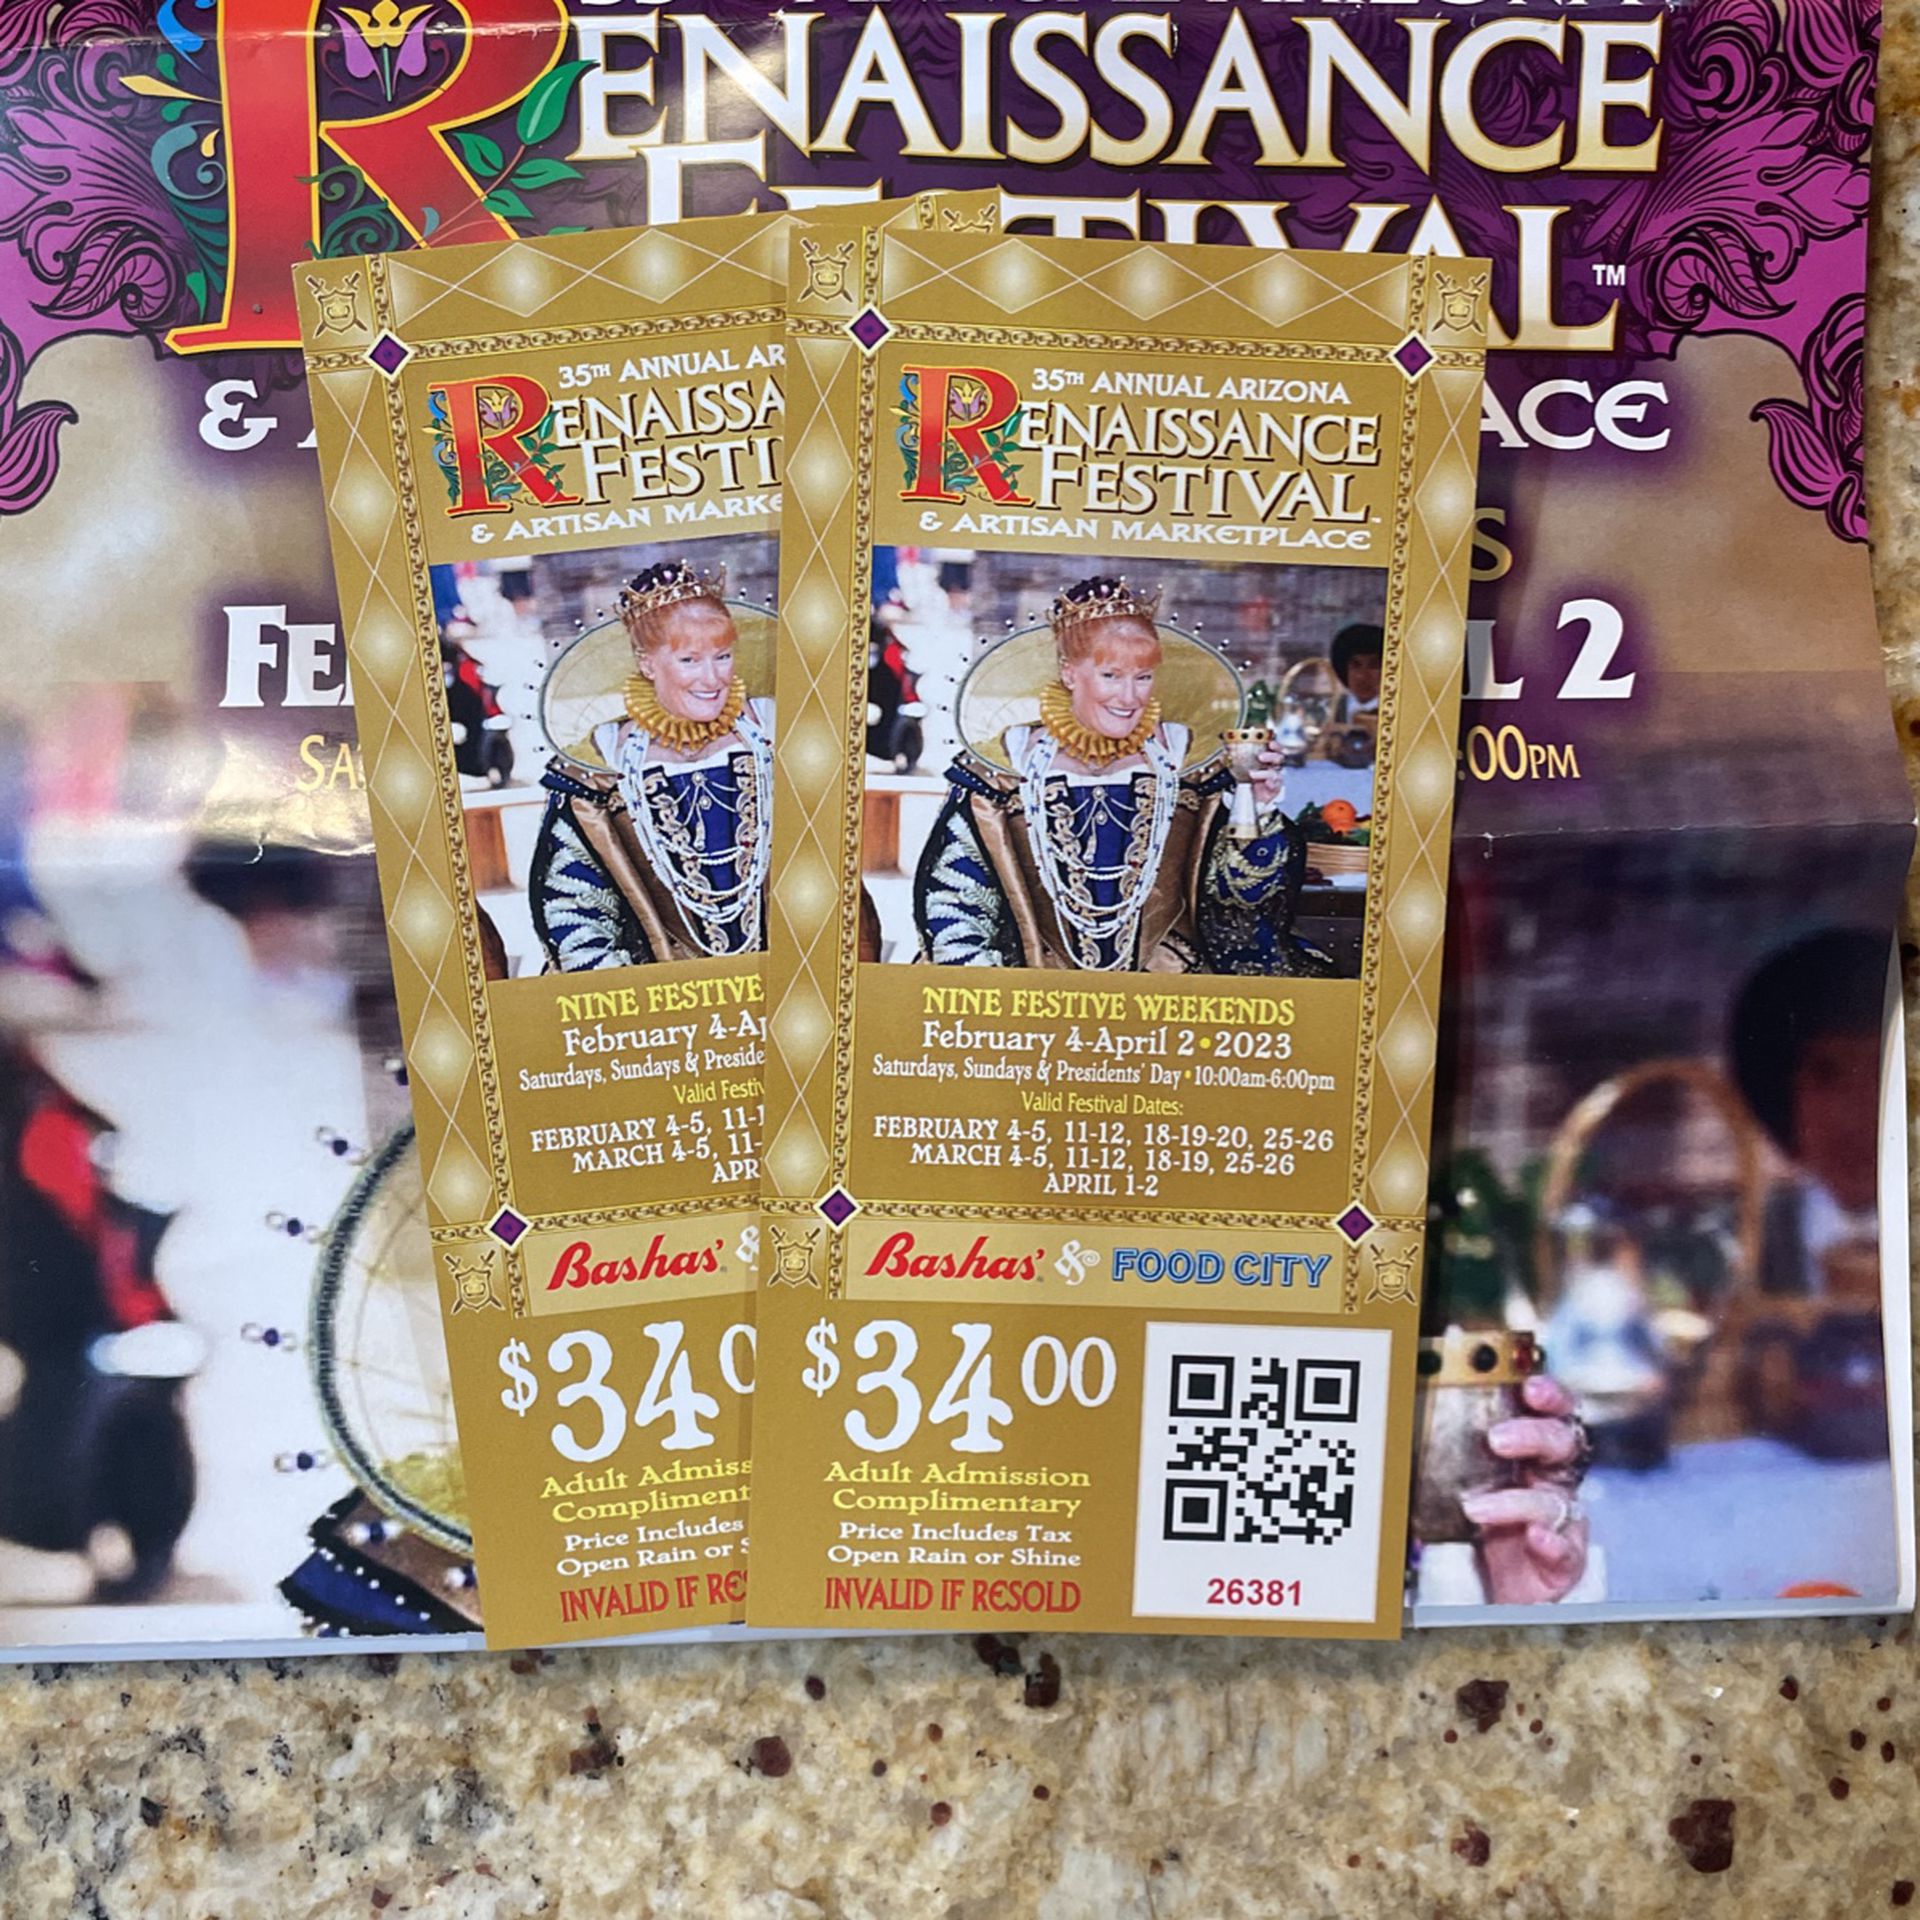 Renaissance Festival Tickets